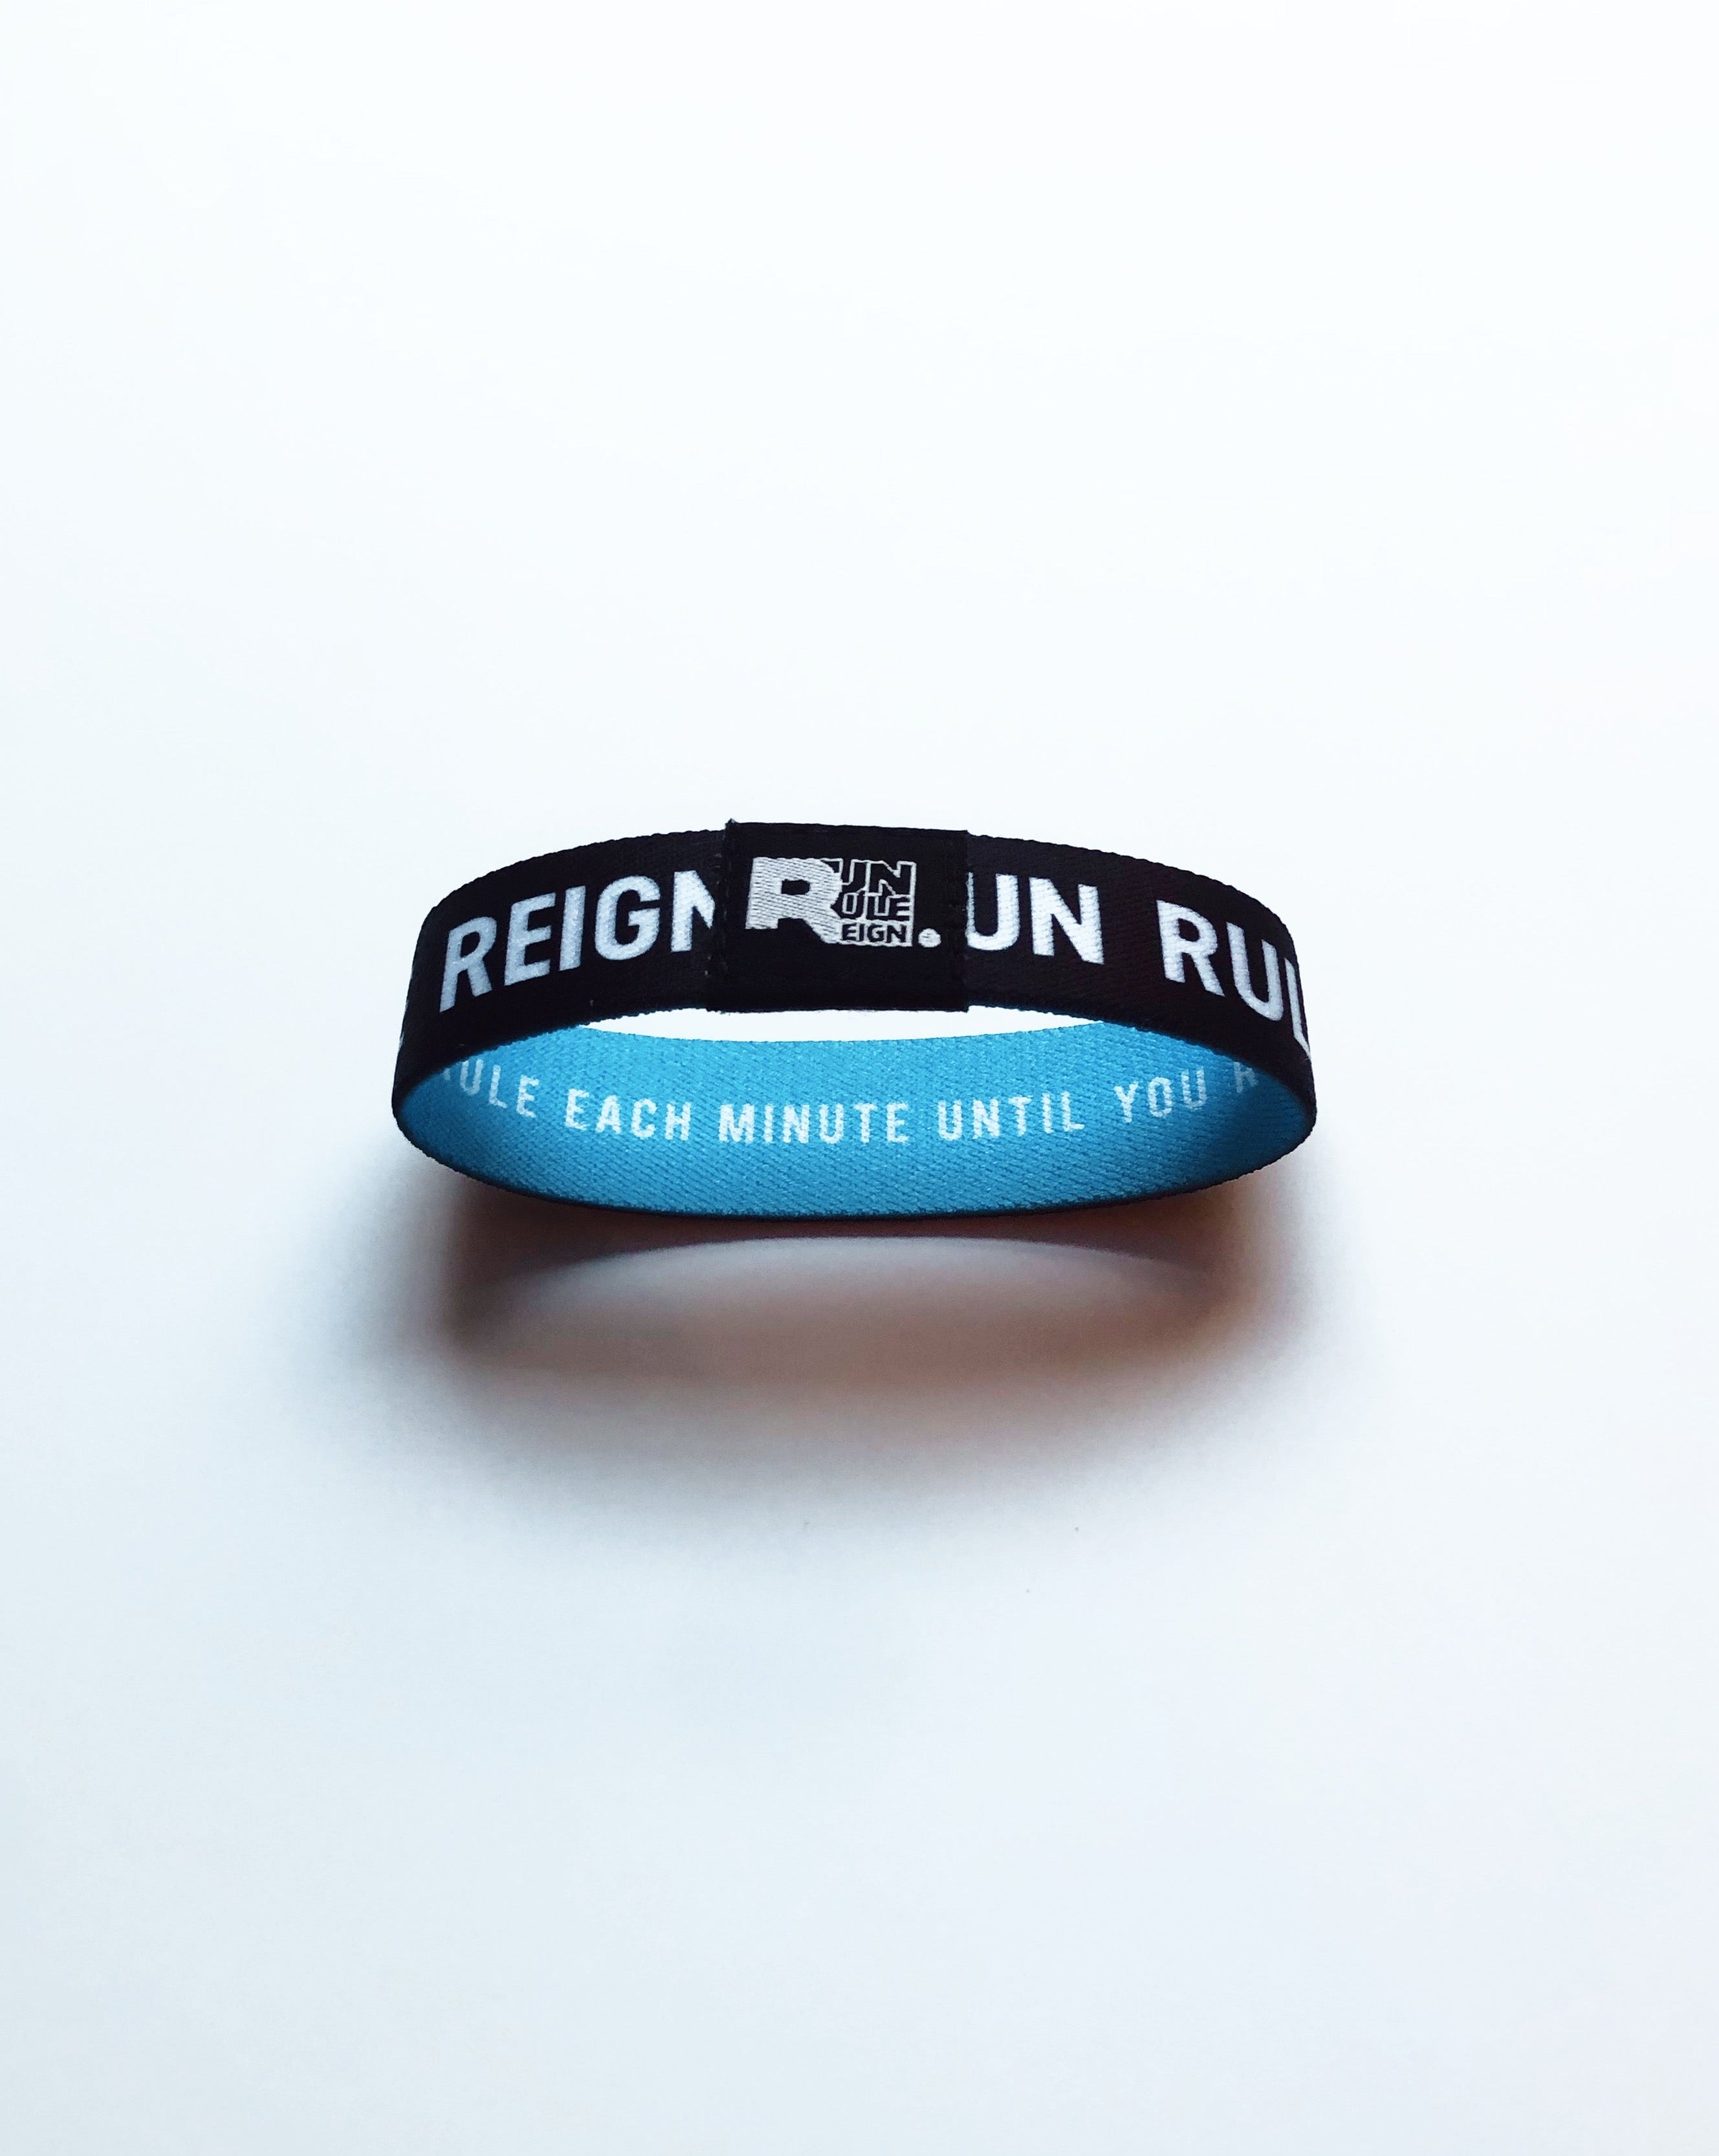 RUN RULE REIGN™ Signature Wristband